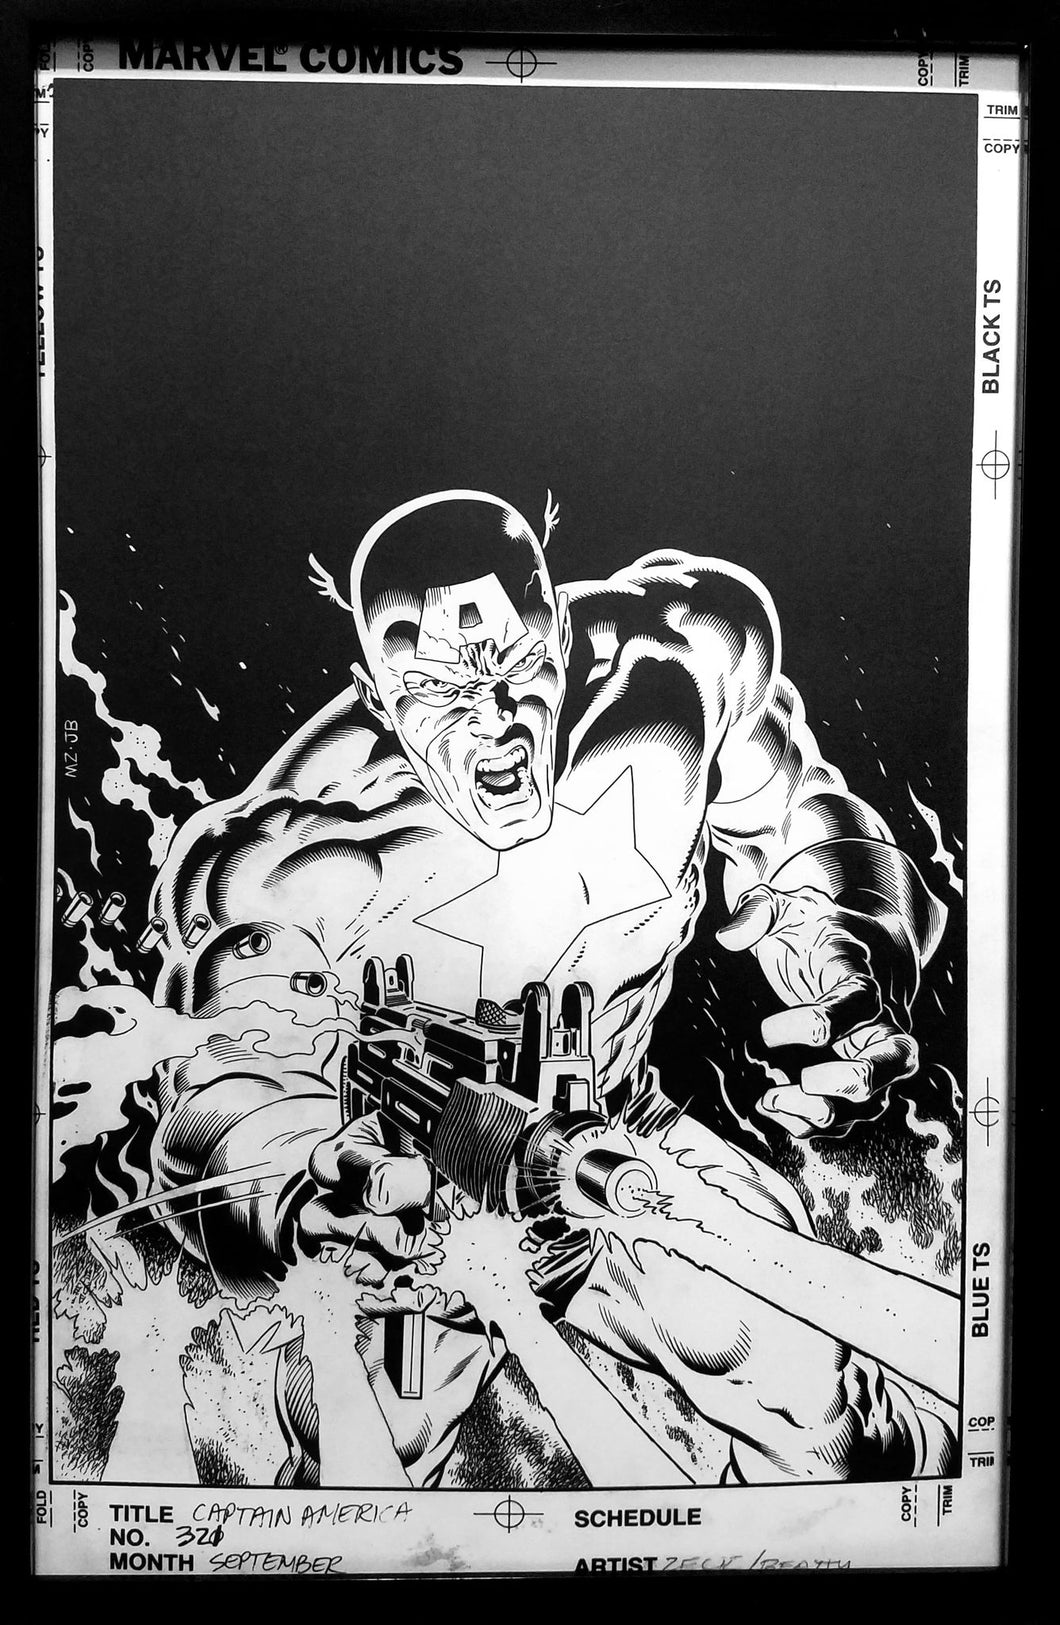 Captain America #321 by Mike Zeck 11x17 FRAMED Original Art Poster Marvel Comics